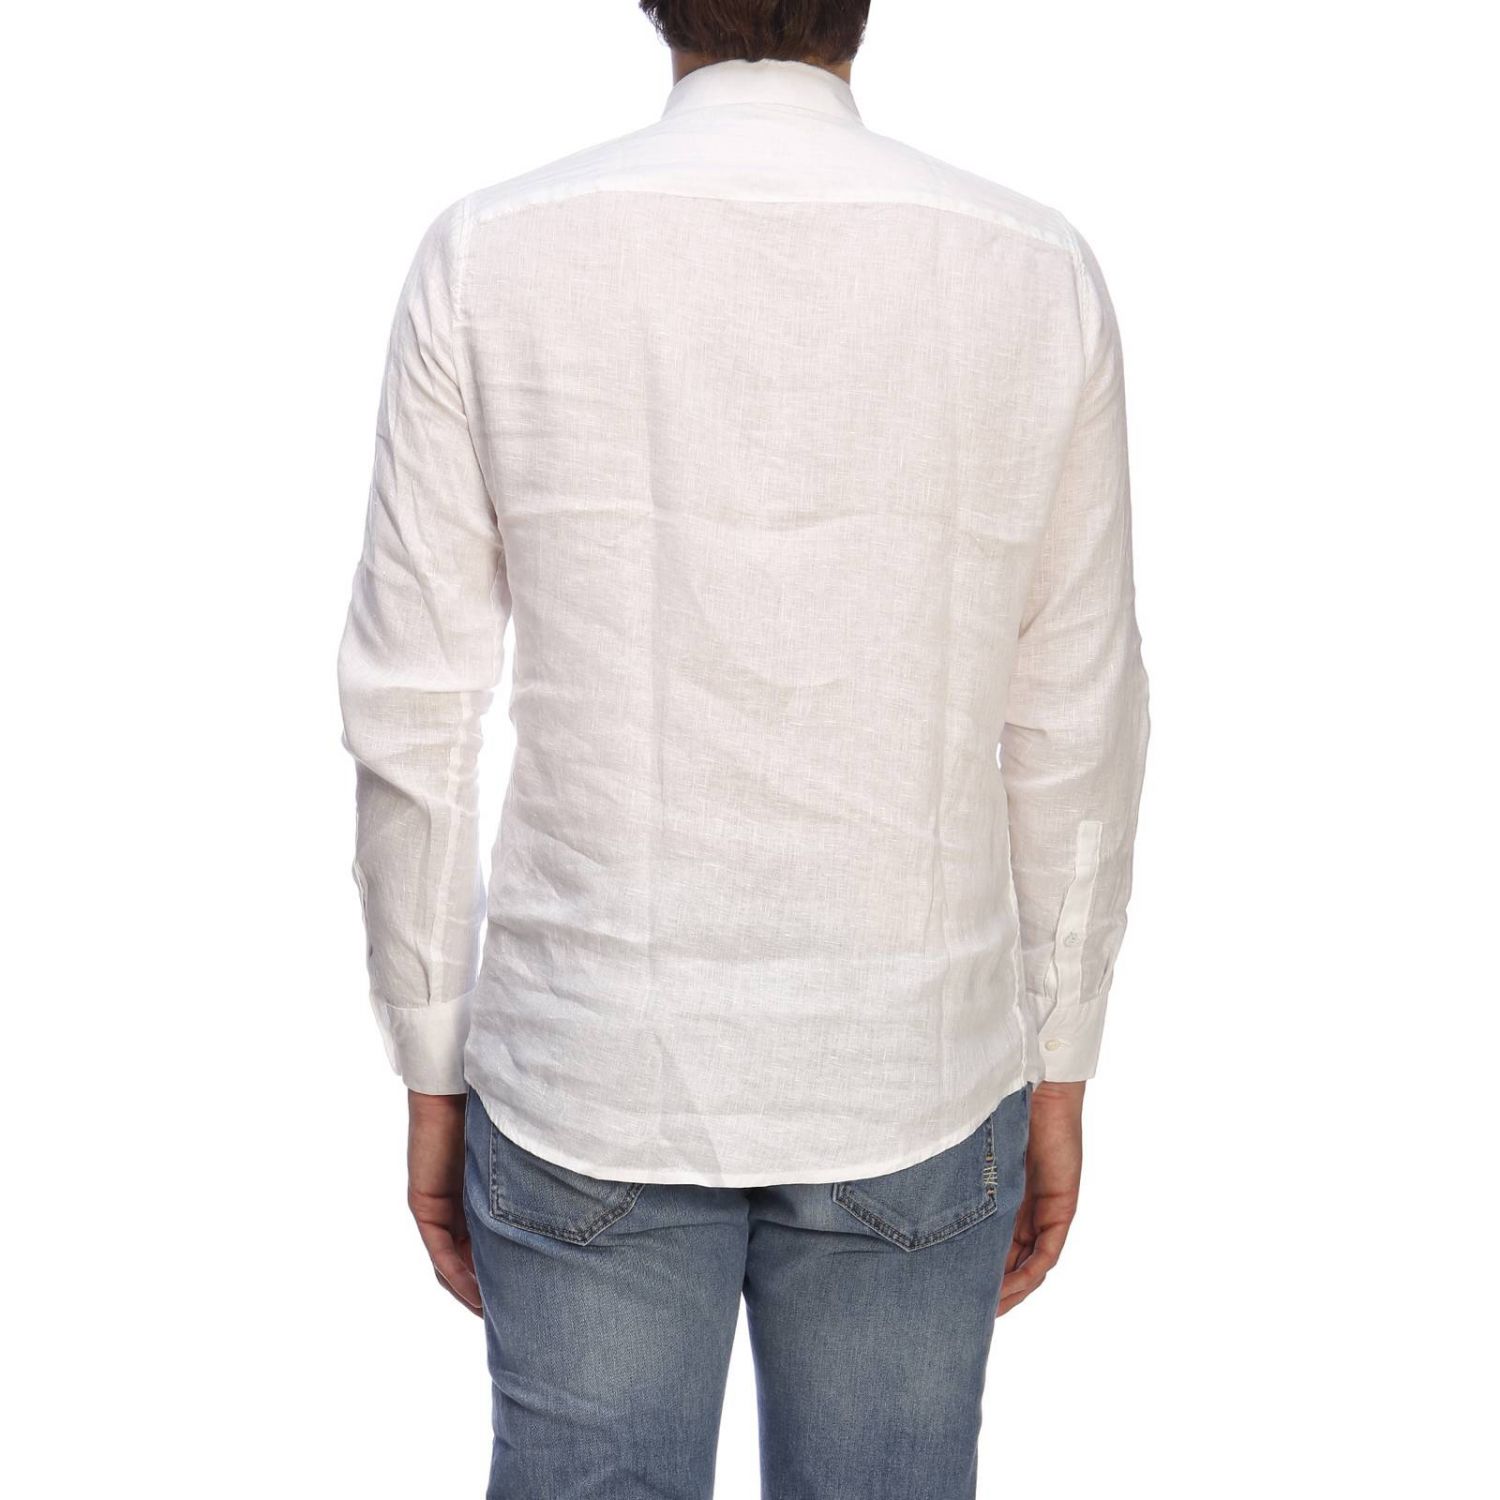 Emporio Armani Outlet: Shirt men | Shirt Emporio Armani Men White ...